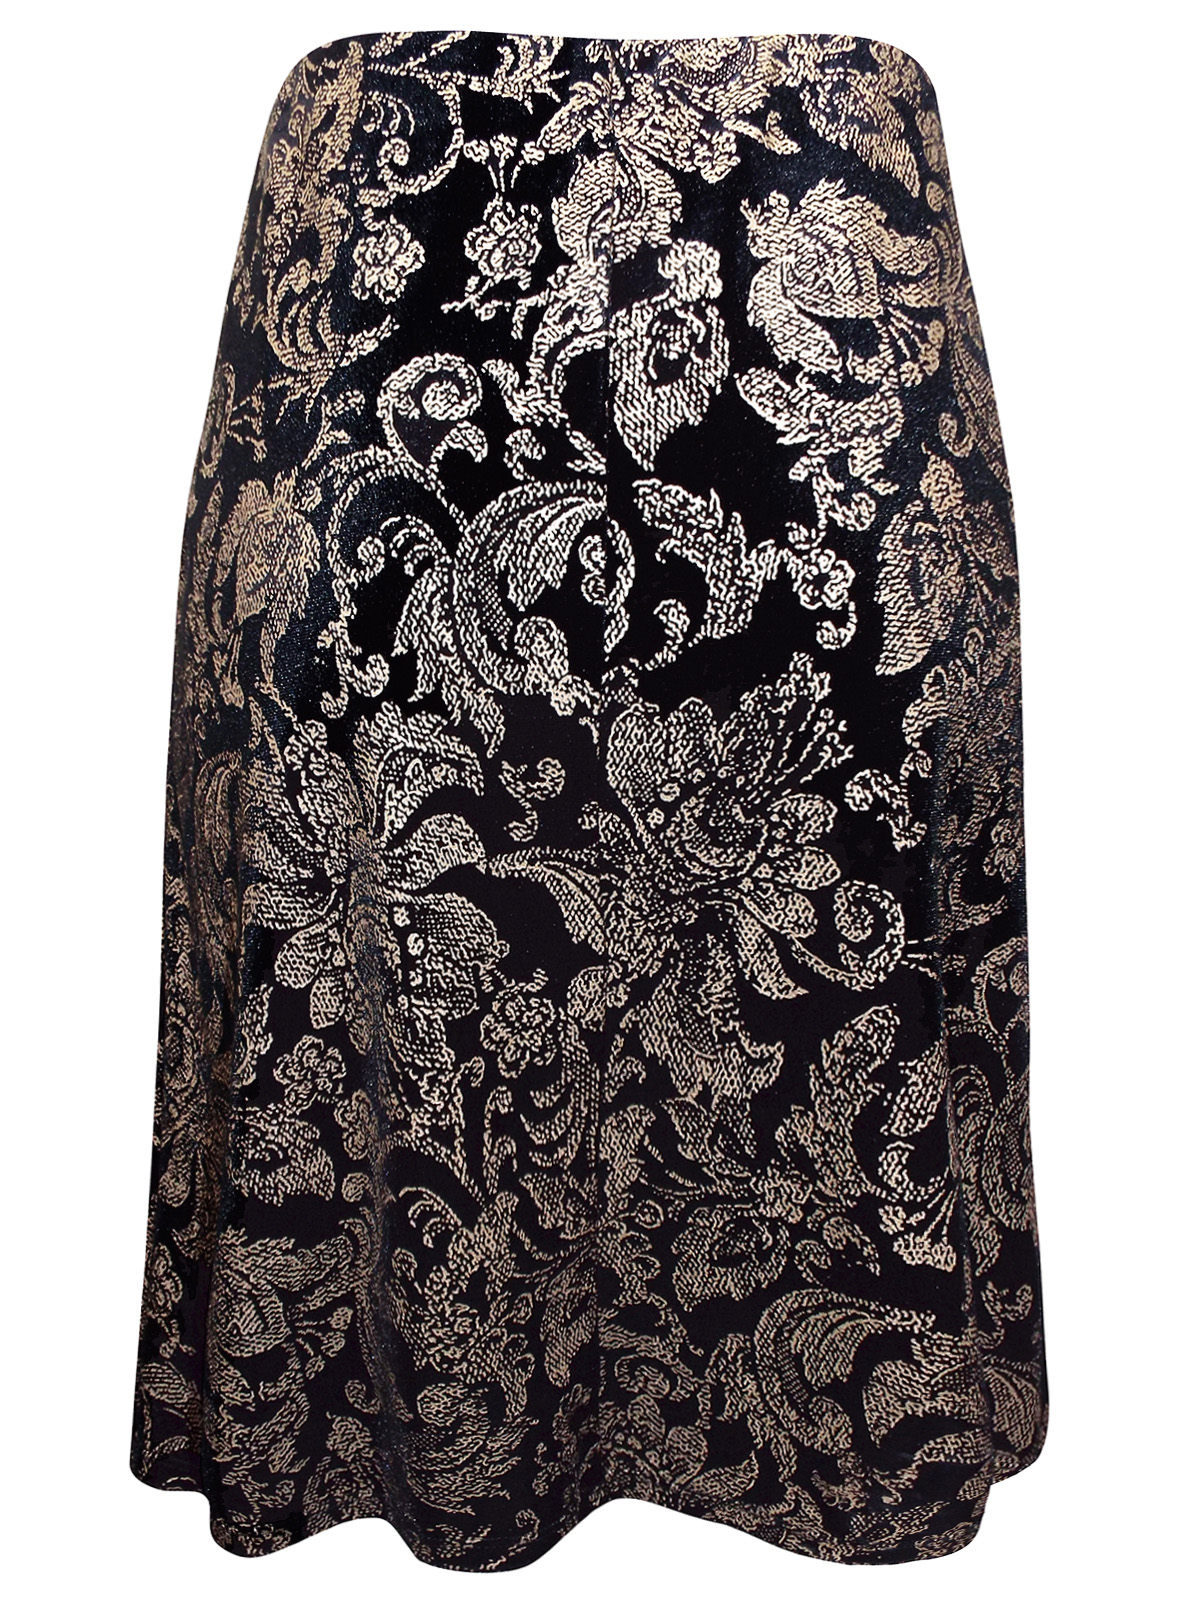 M&Co - - M&Co BLACK Floral Print Velour Mini Skirt - Size 10 to 20